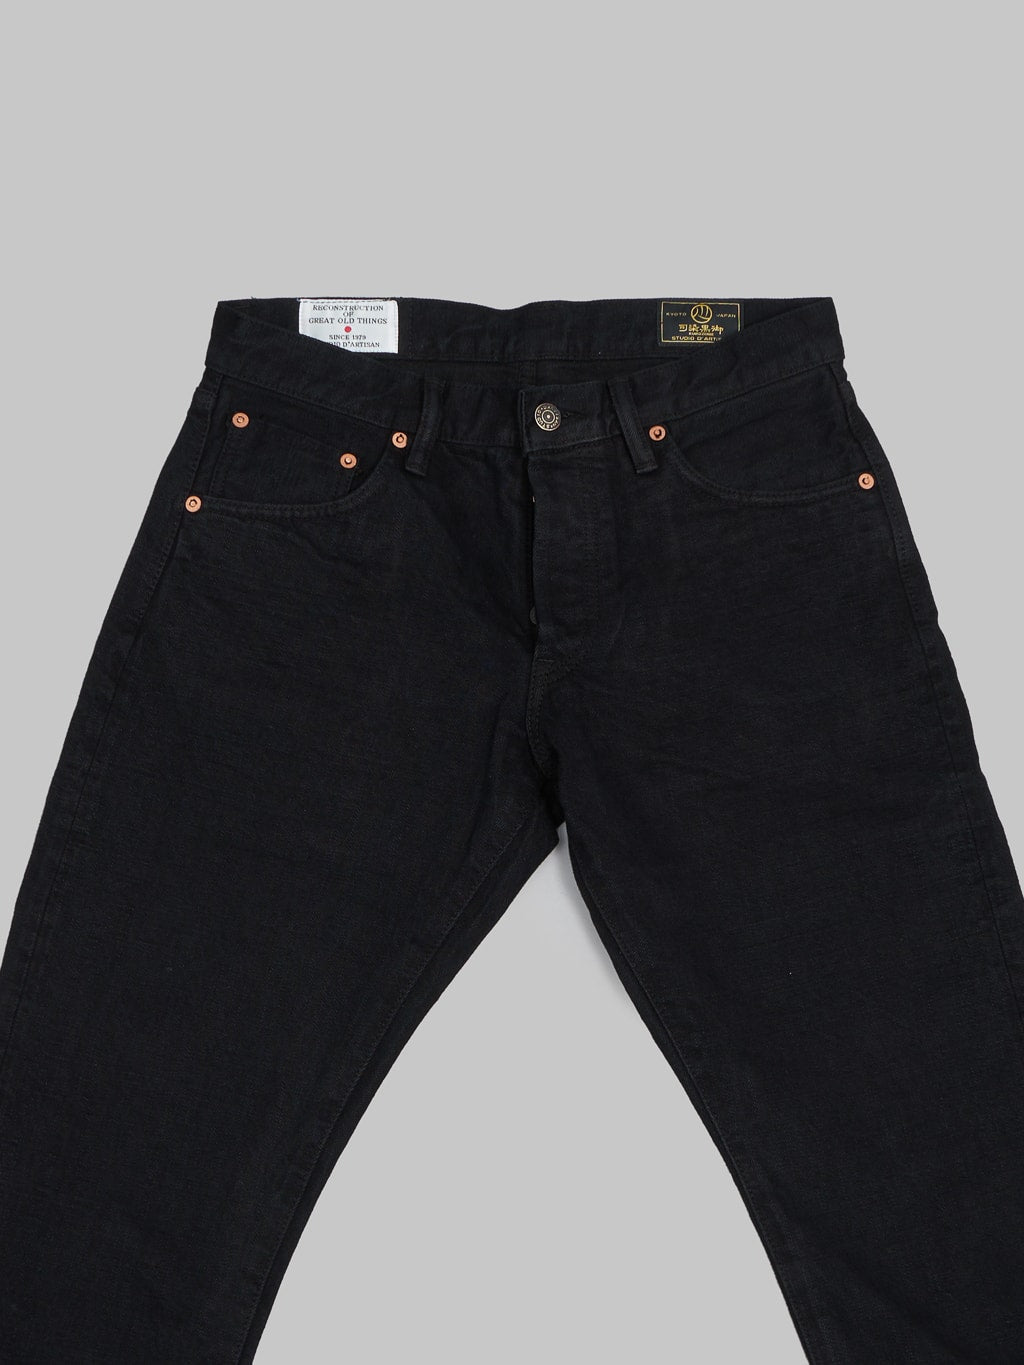 Studio DArtisan Kurozome Black 14oz Selvedge Jeans Relaxed Tapered waist